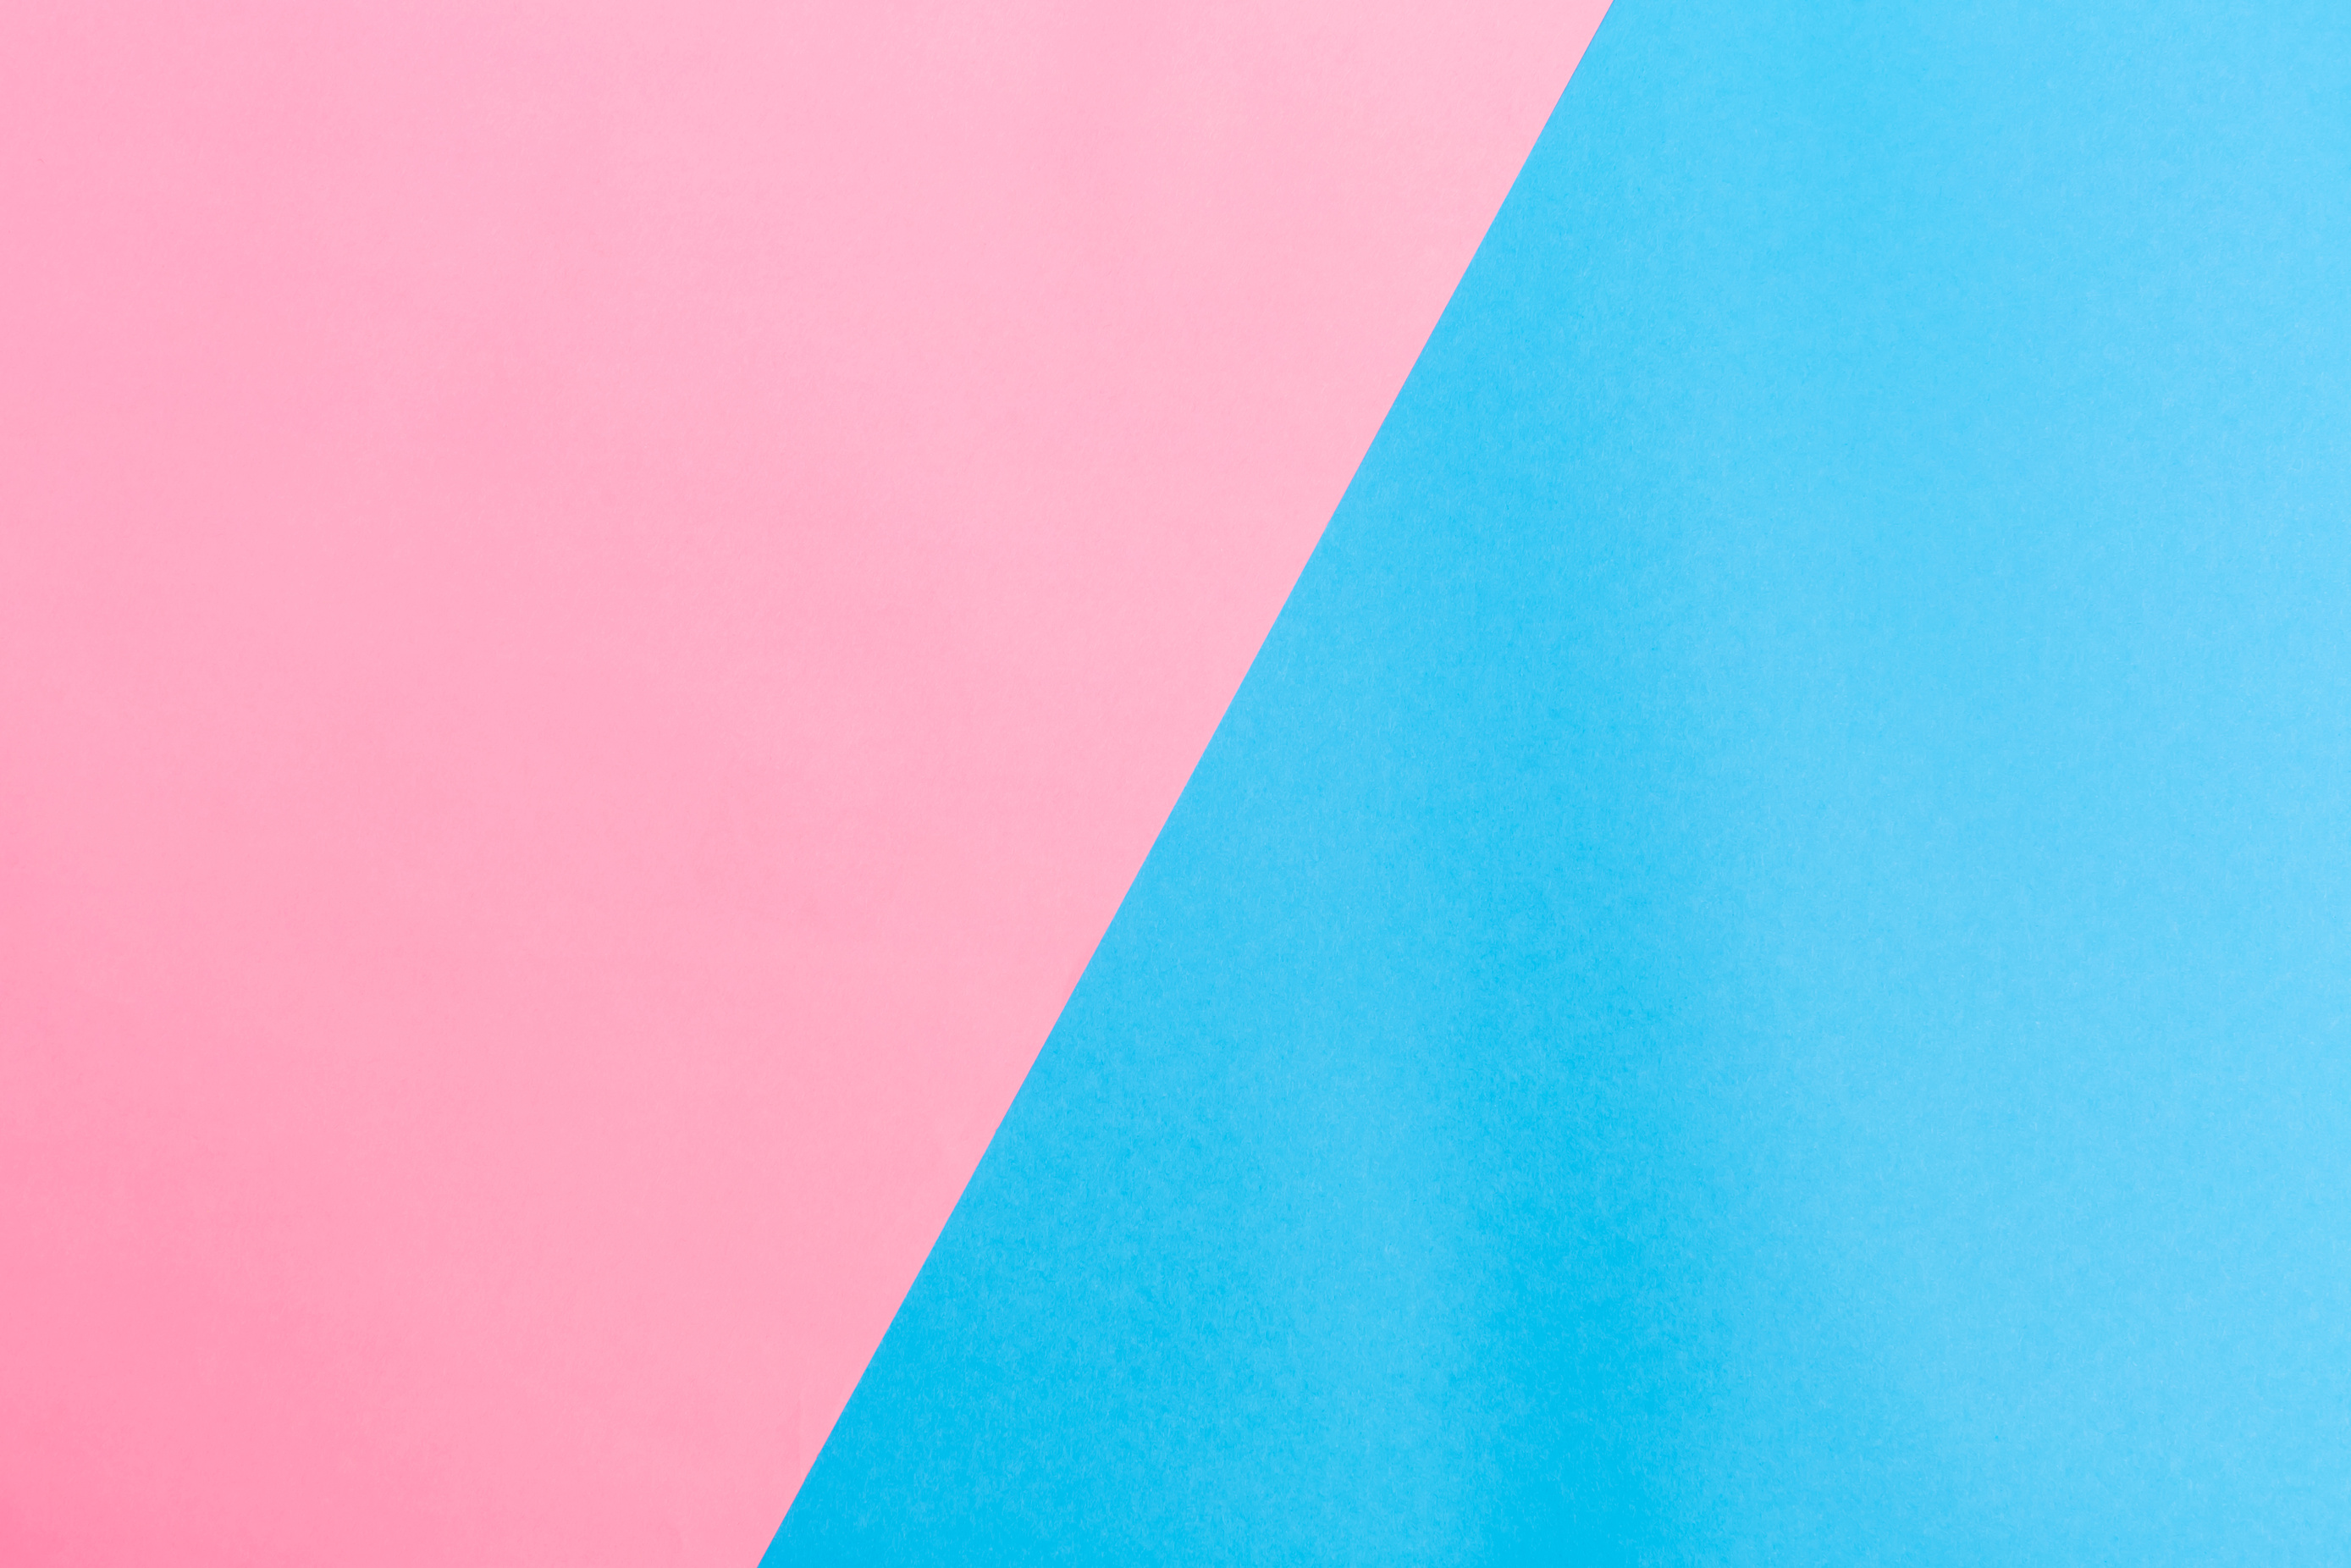 Split blank pink and blue vibrant background